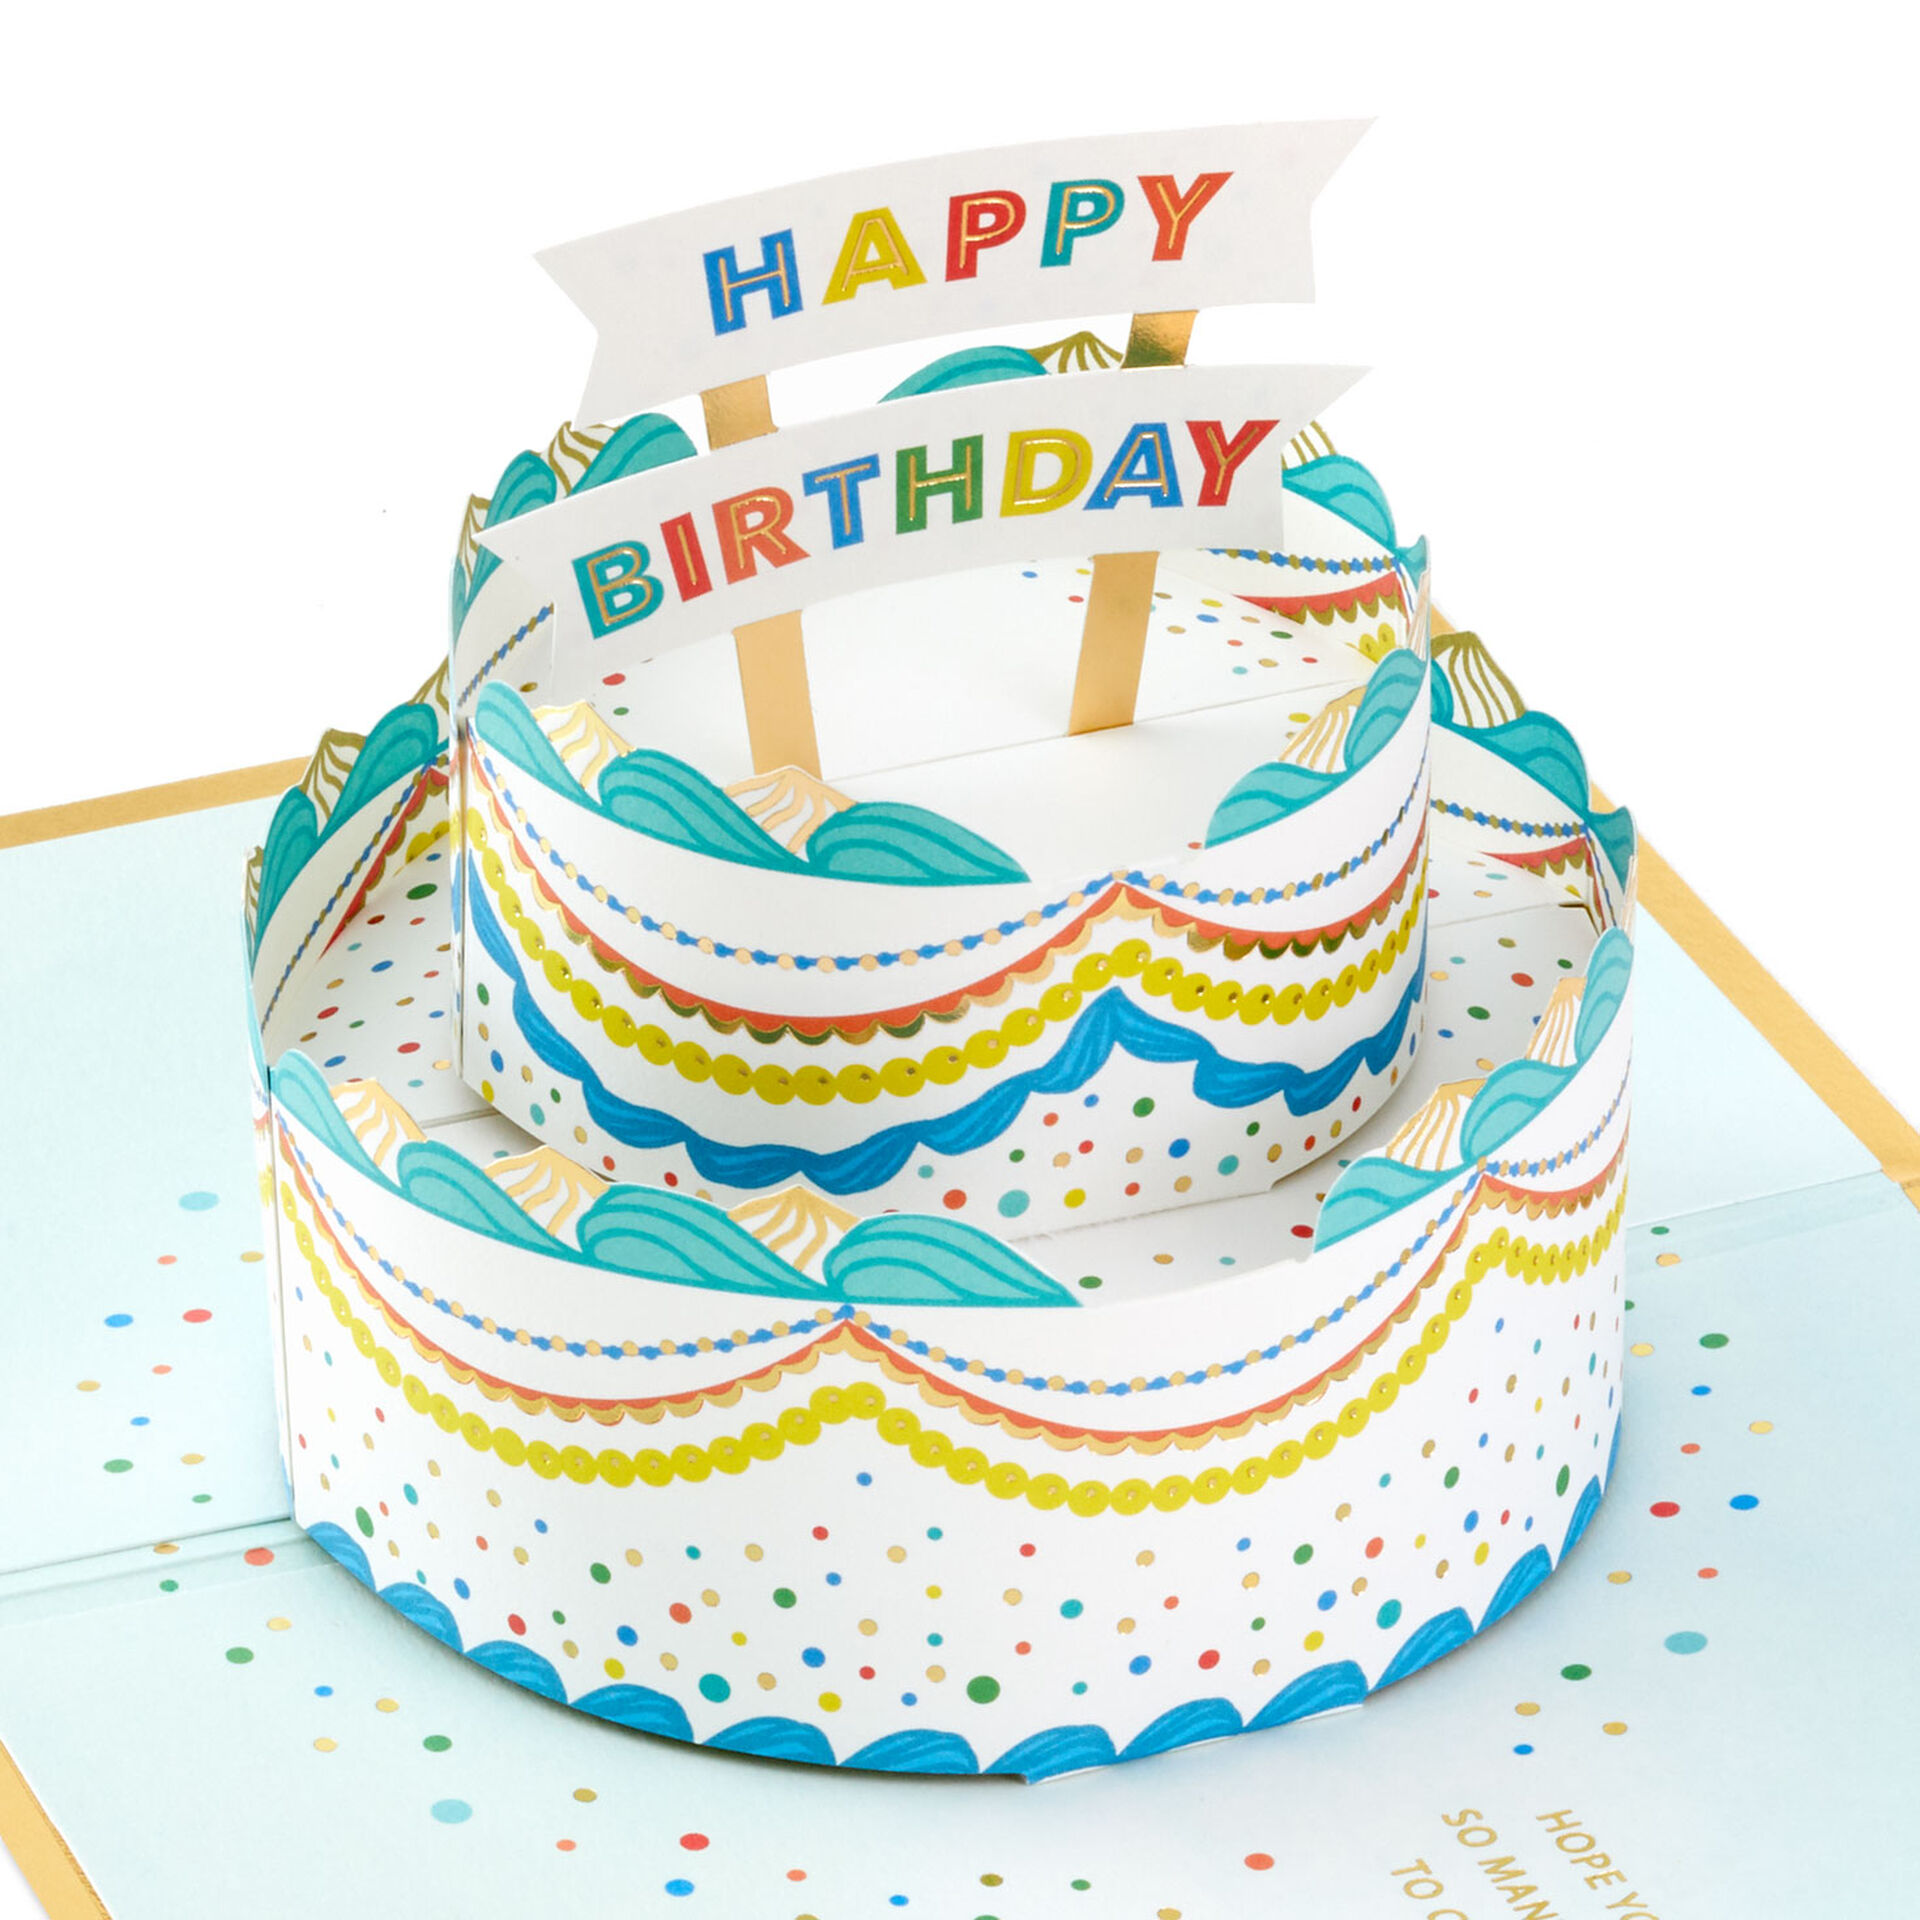 Birthday-Cake-3D-PopUp-Birthday-Card_1299LAD2895_01